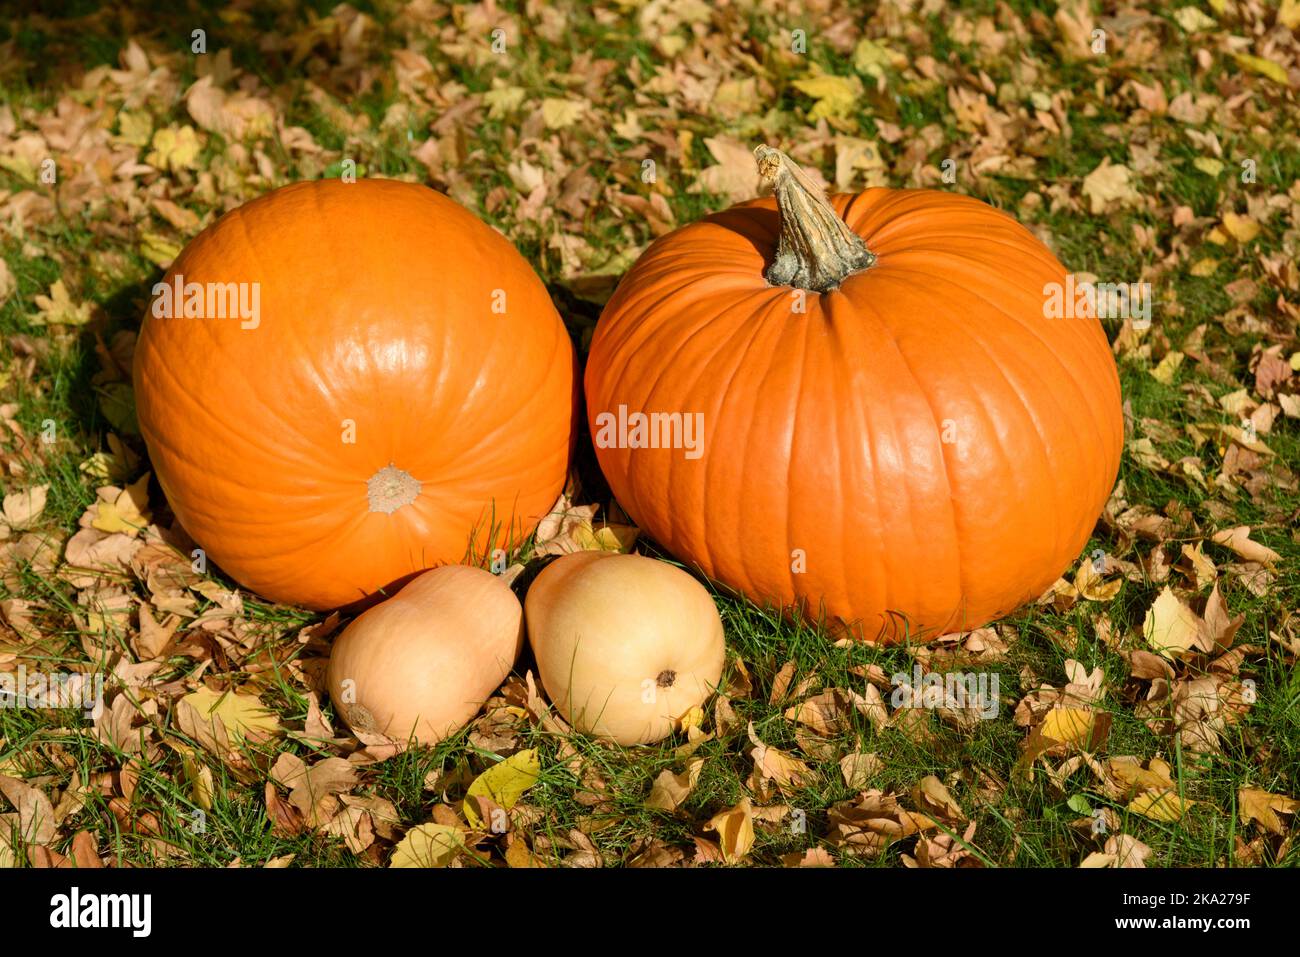 Orange pumpkins (Cucurbita pepo) and butternut squashes (Cucurbita moschata) sitting on the grass among Autumn leaves Stock Photo